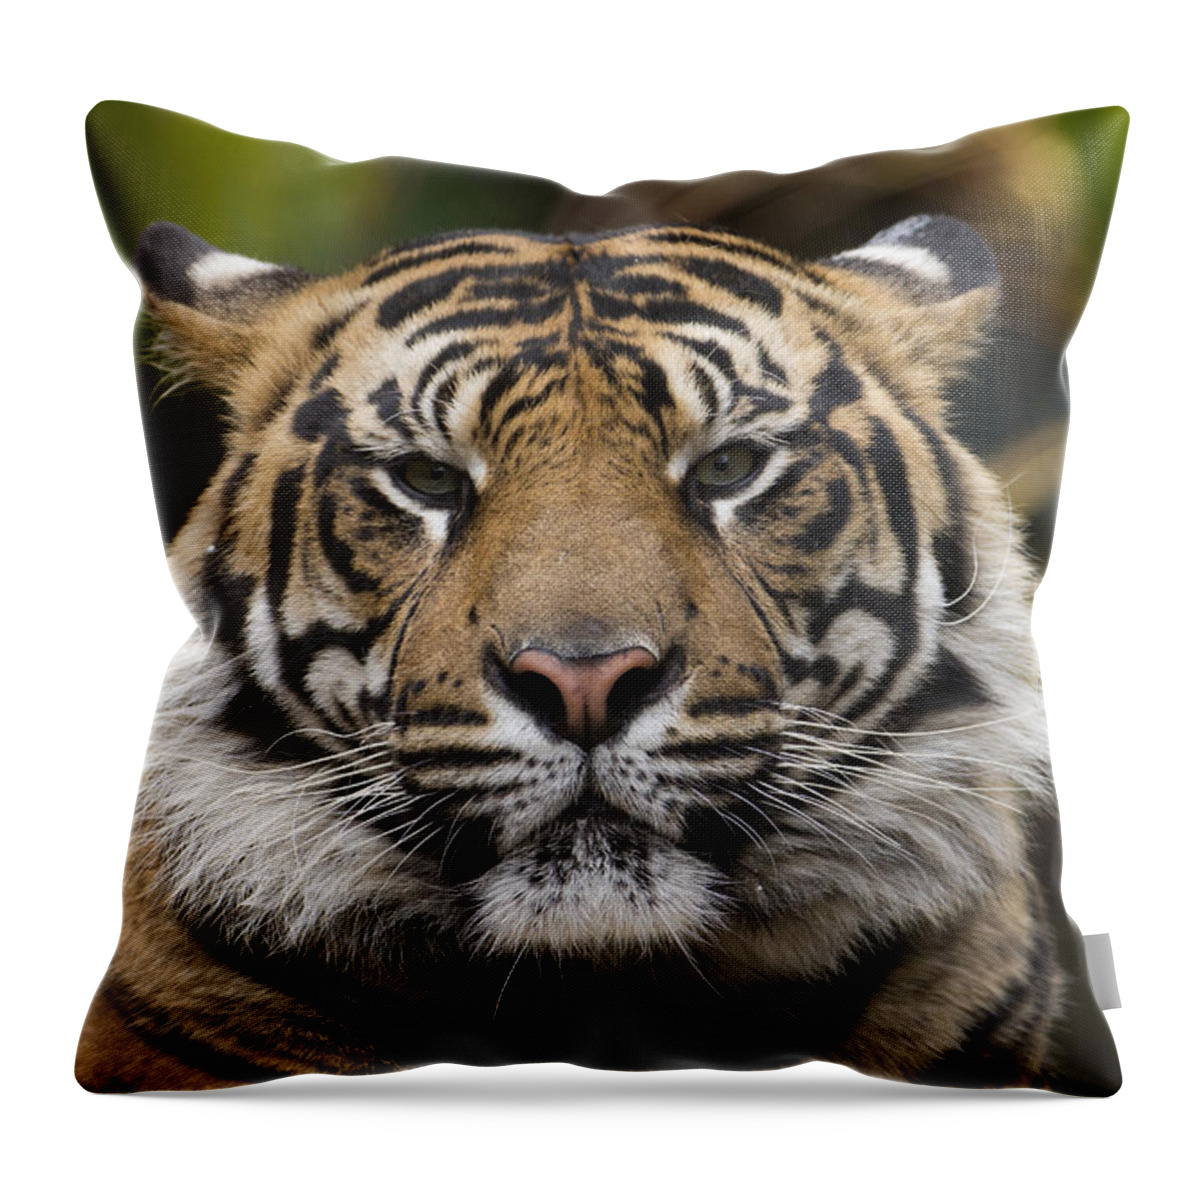 San Diego Zoo Throw Pillow featuring the photograph Sumatran Tiger by San Diego Zoo